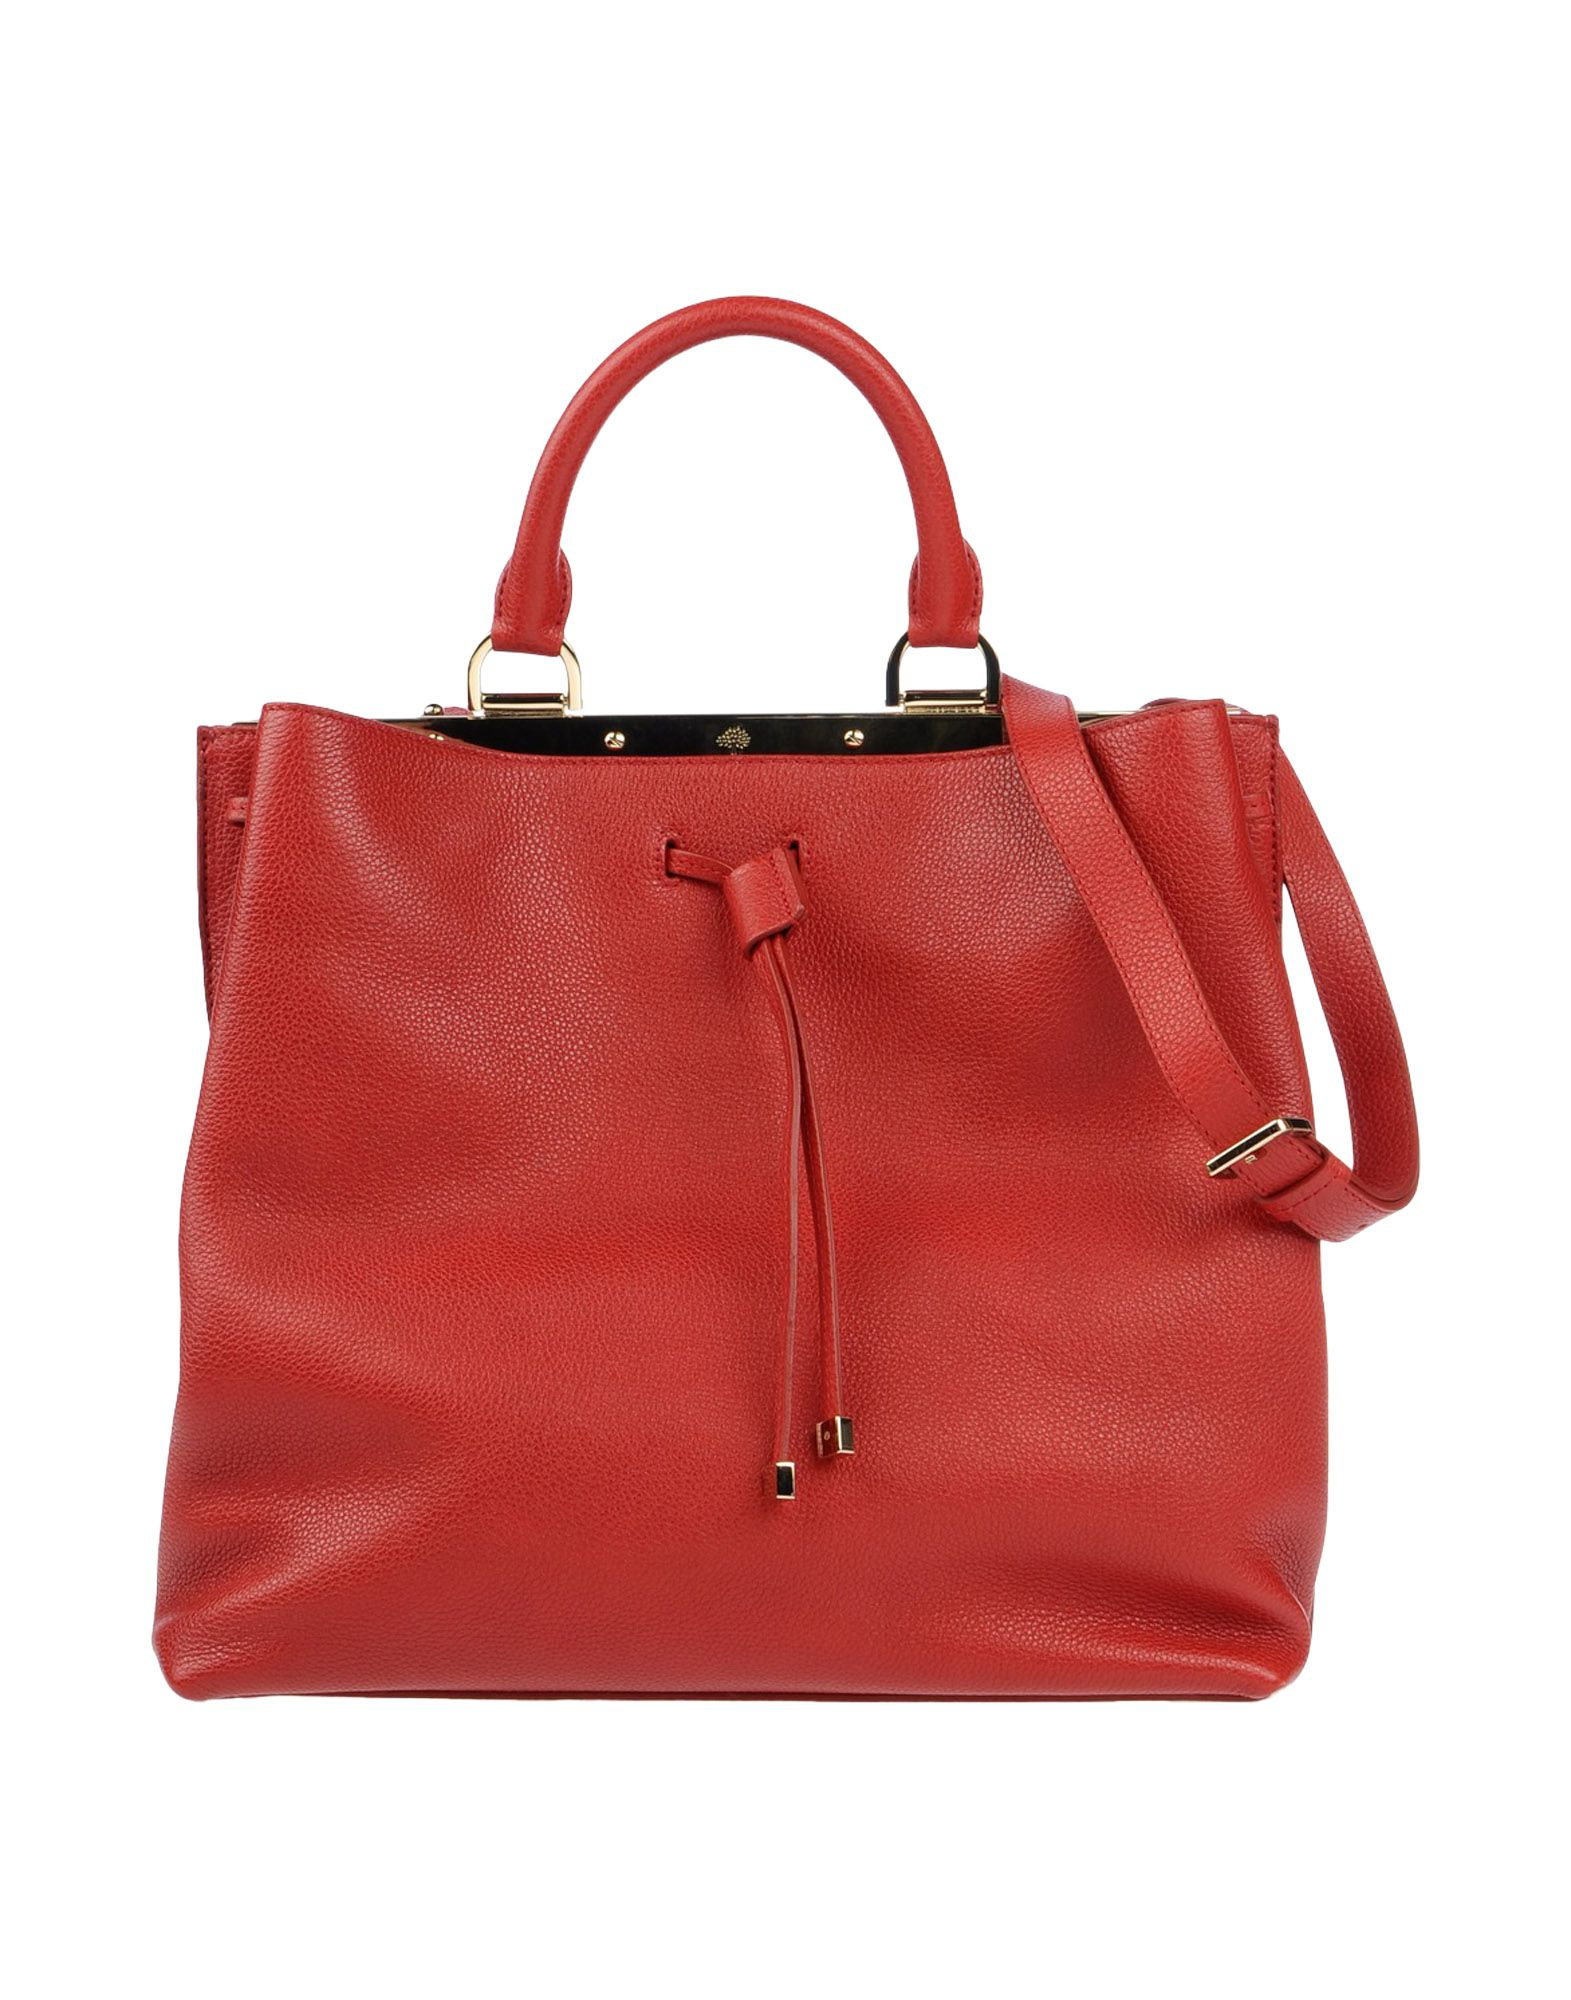 Lyst - Mulberry Handbag in Red